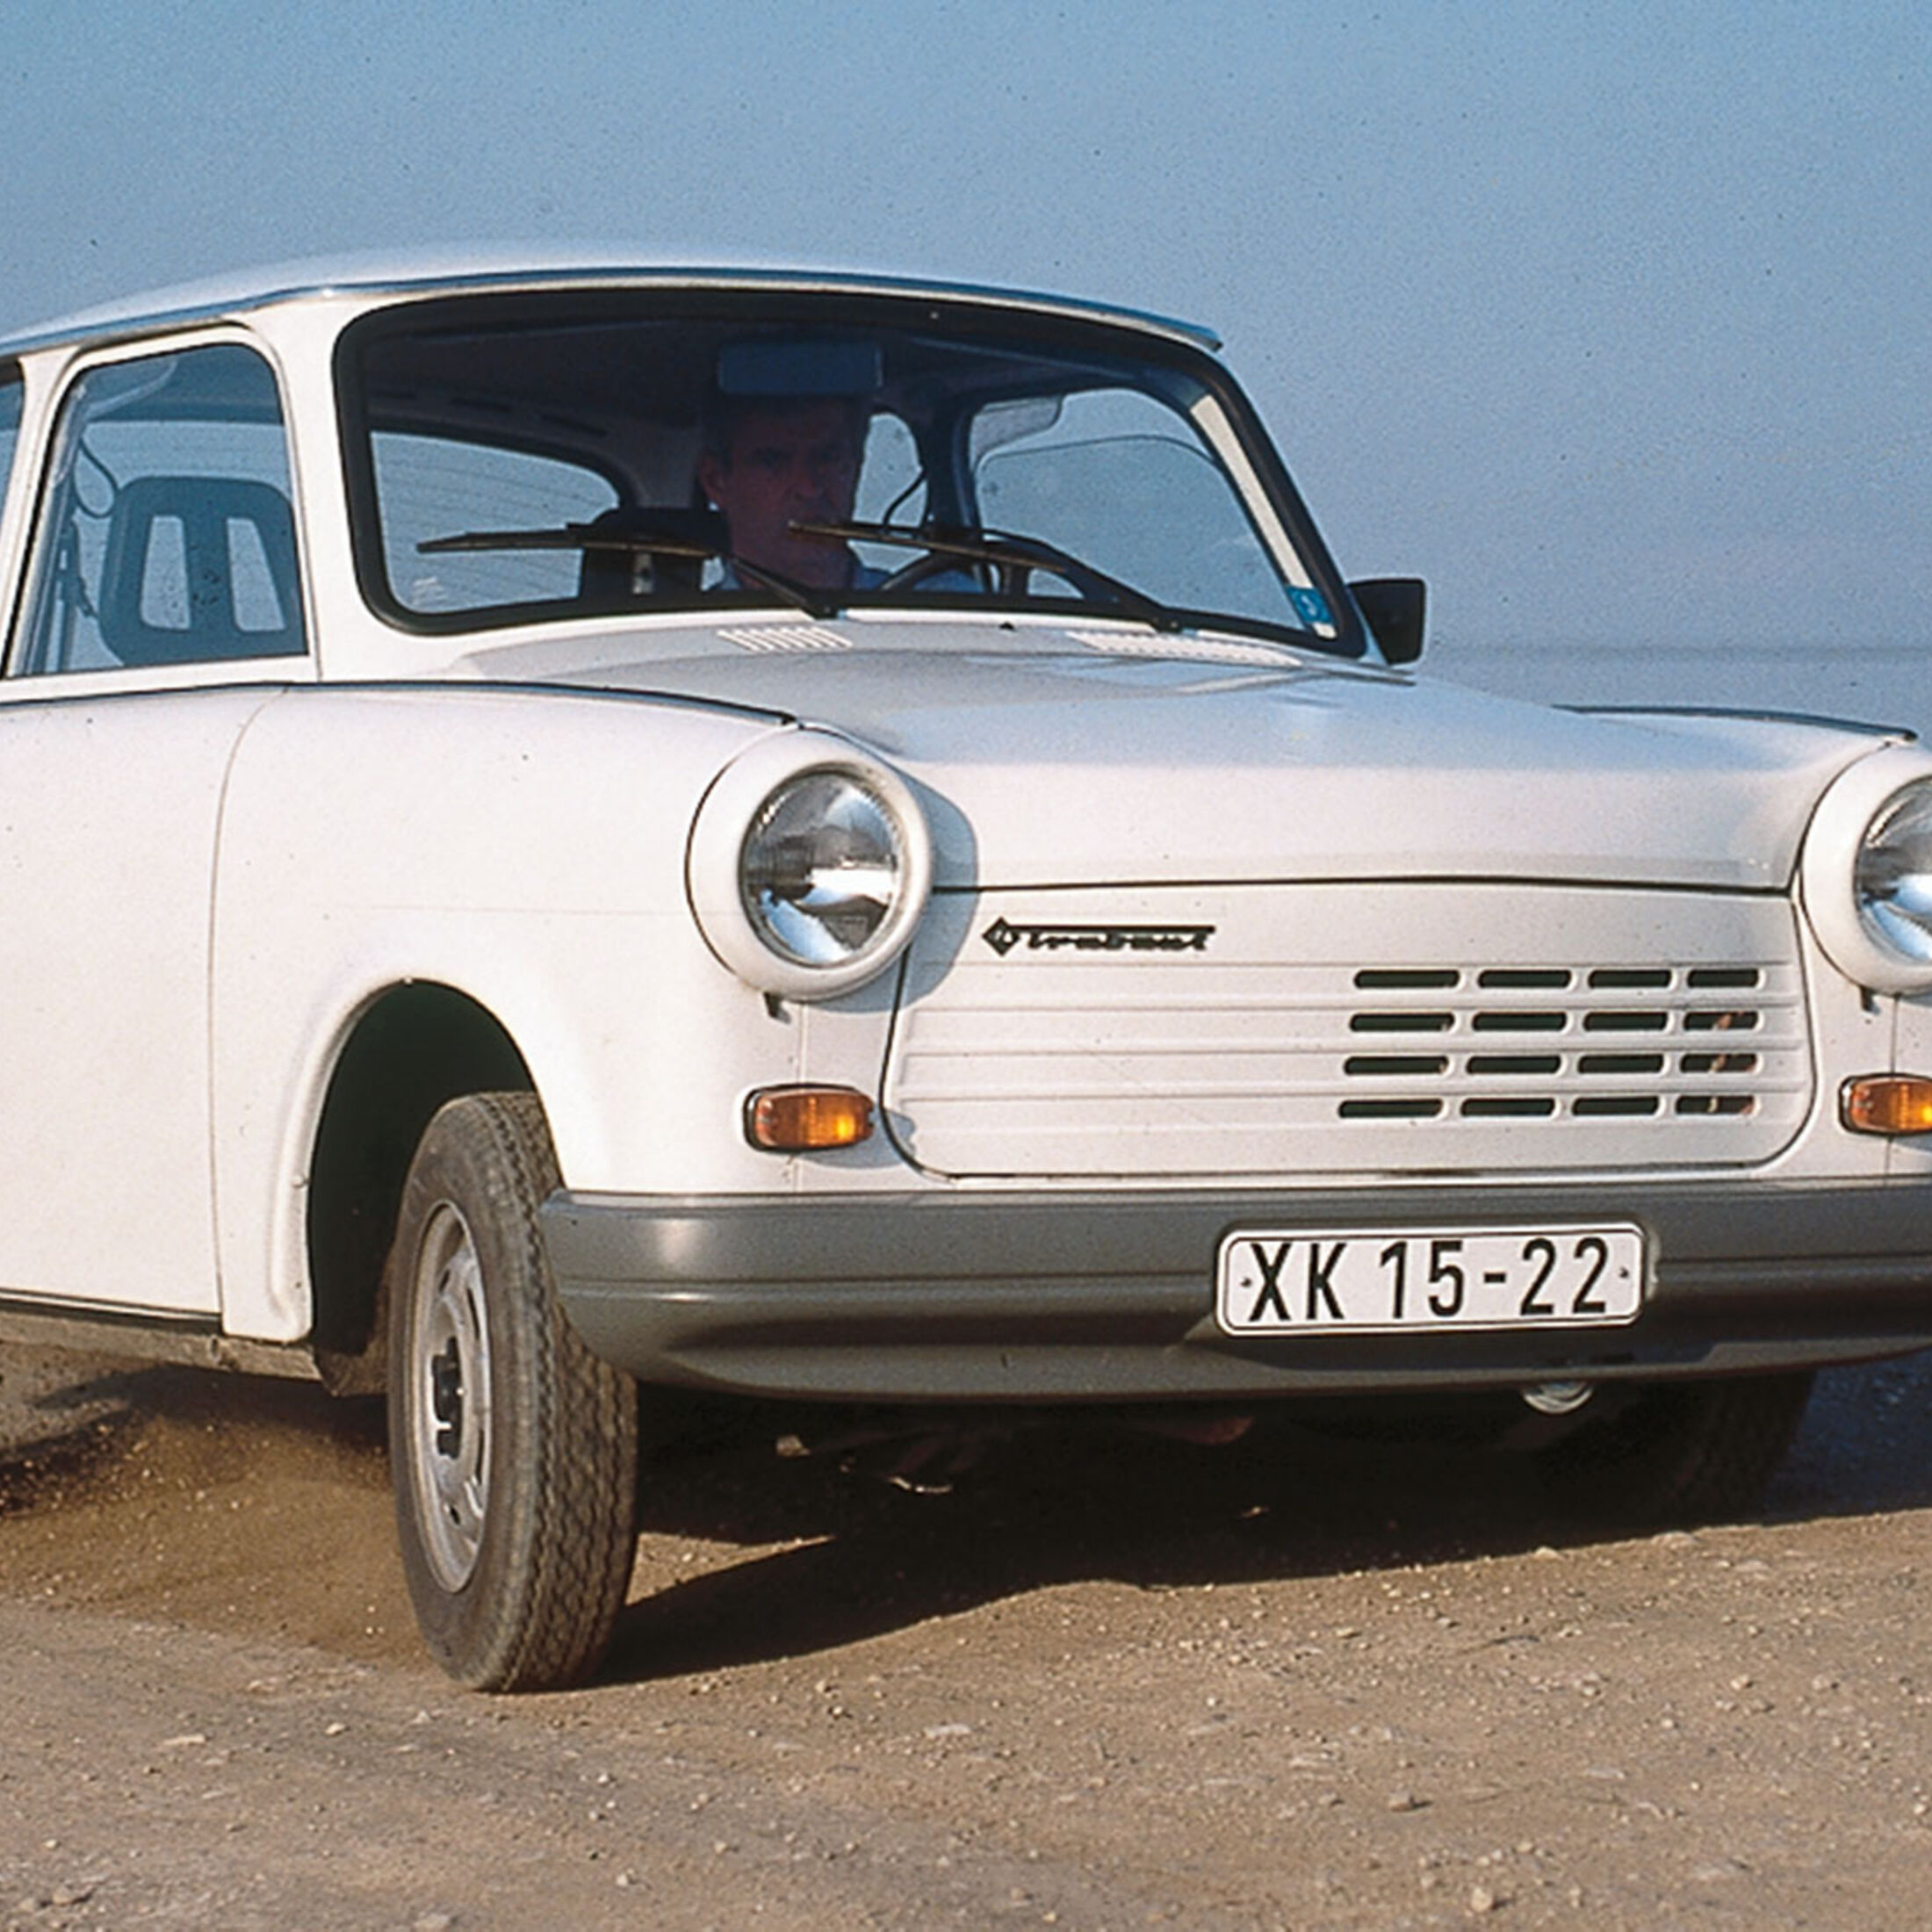 Auto-Legende Trabant (1957-1991): Technik, Design, Preis